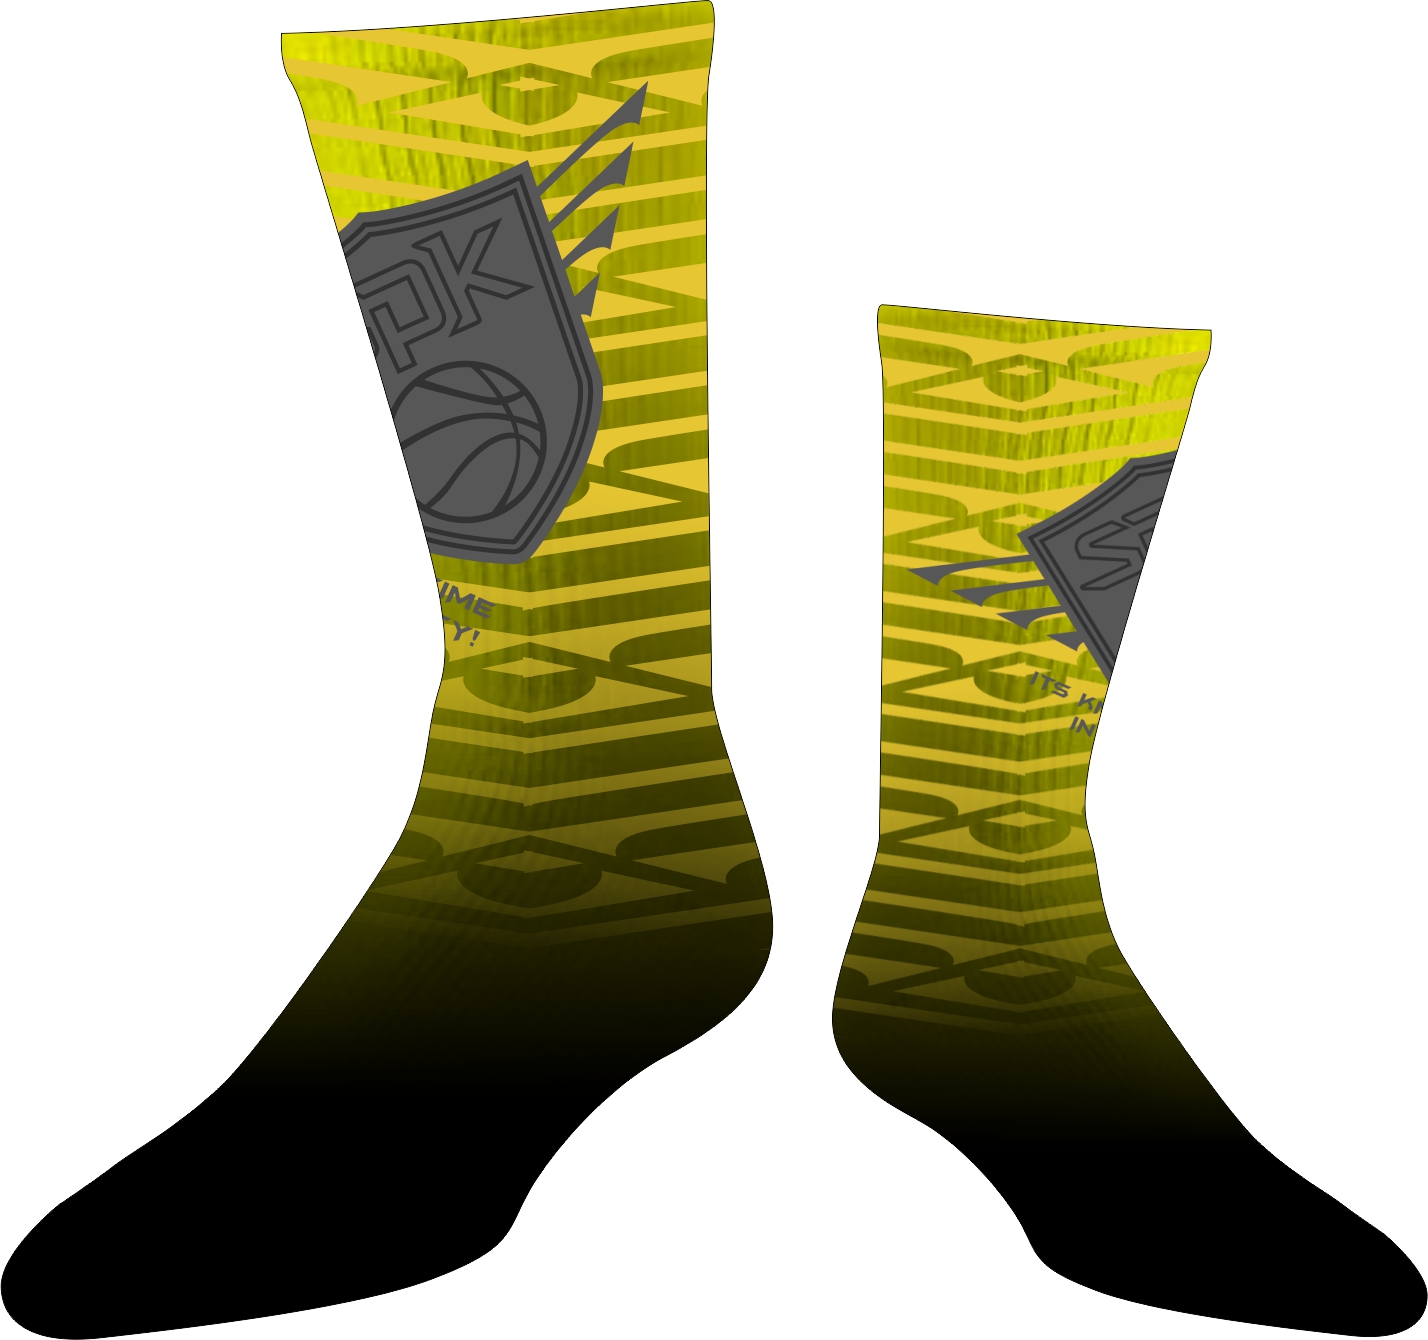 socks 016